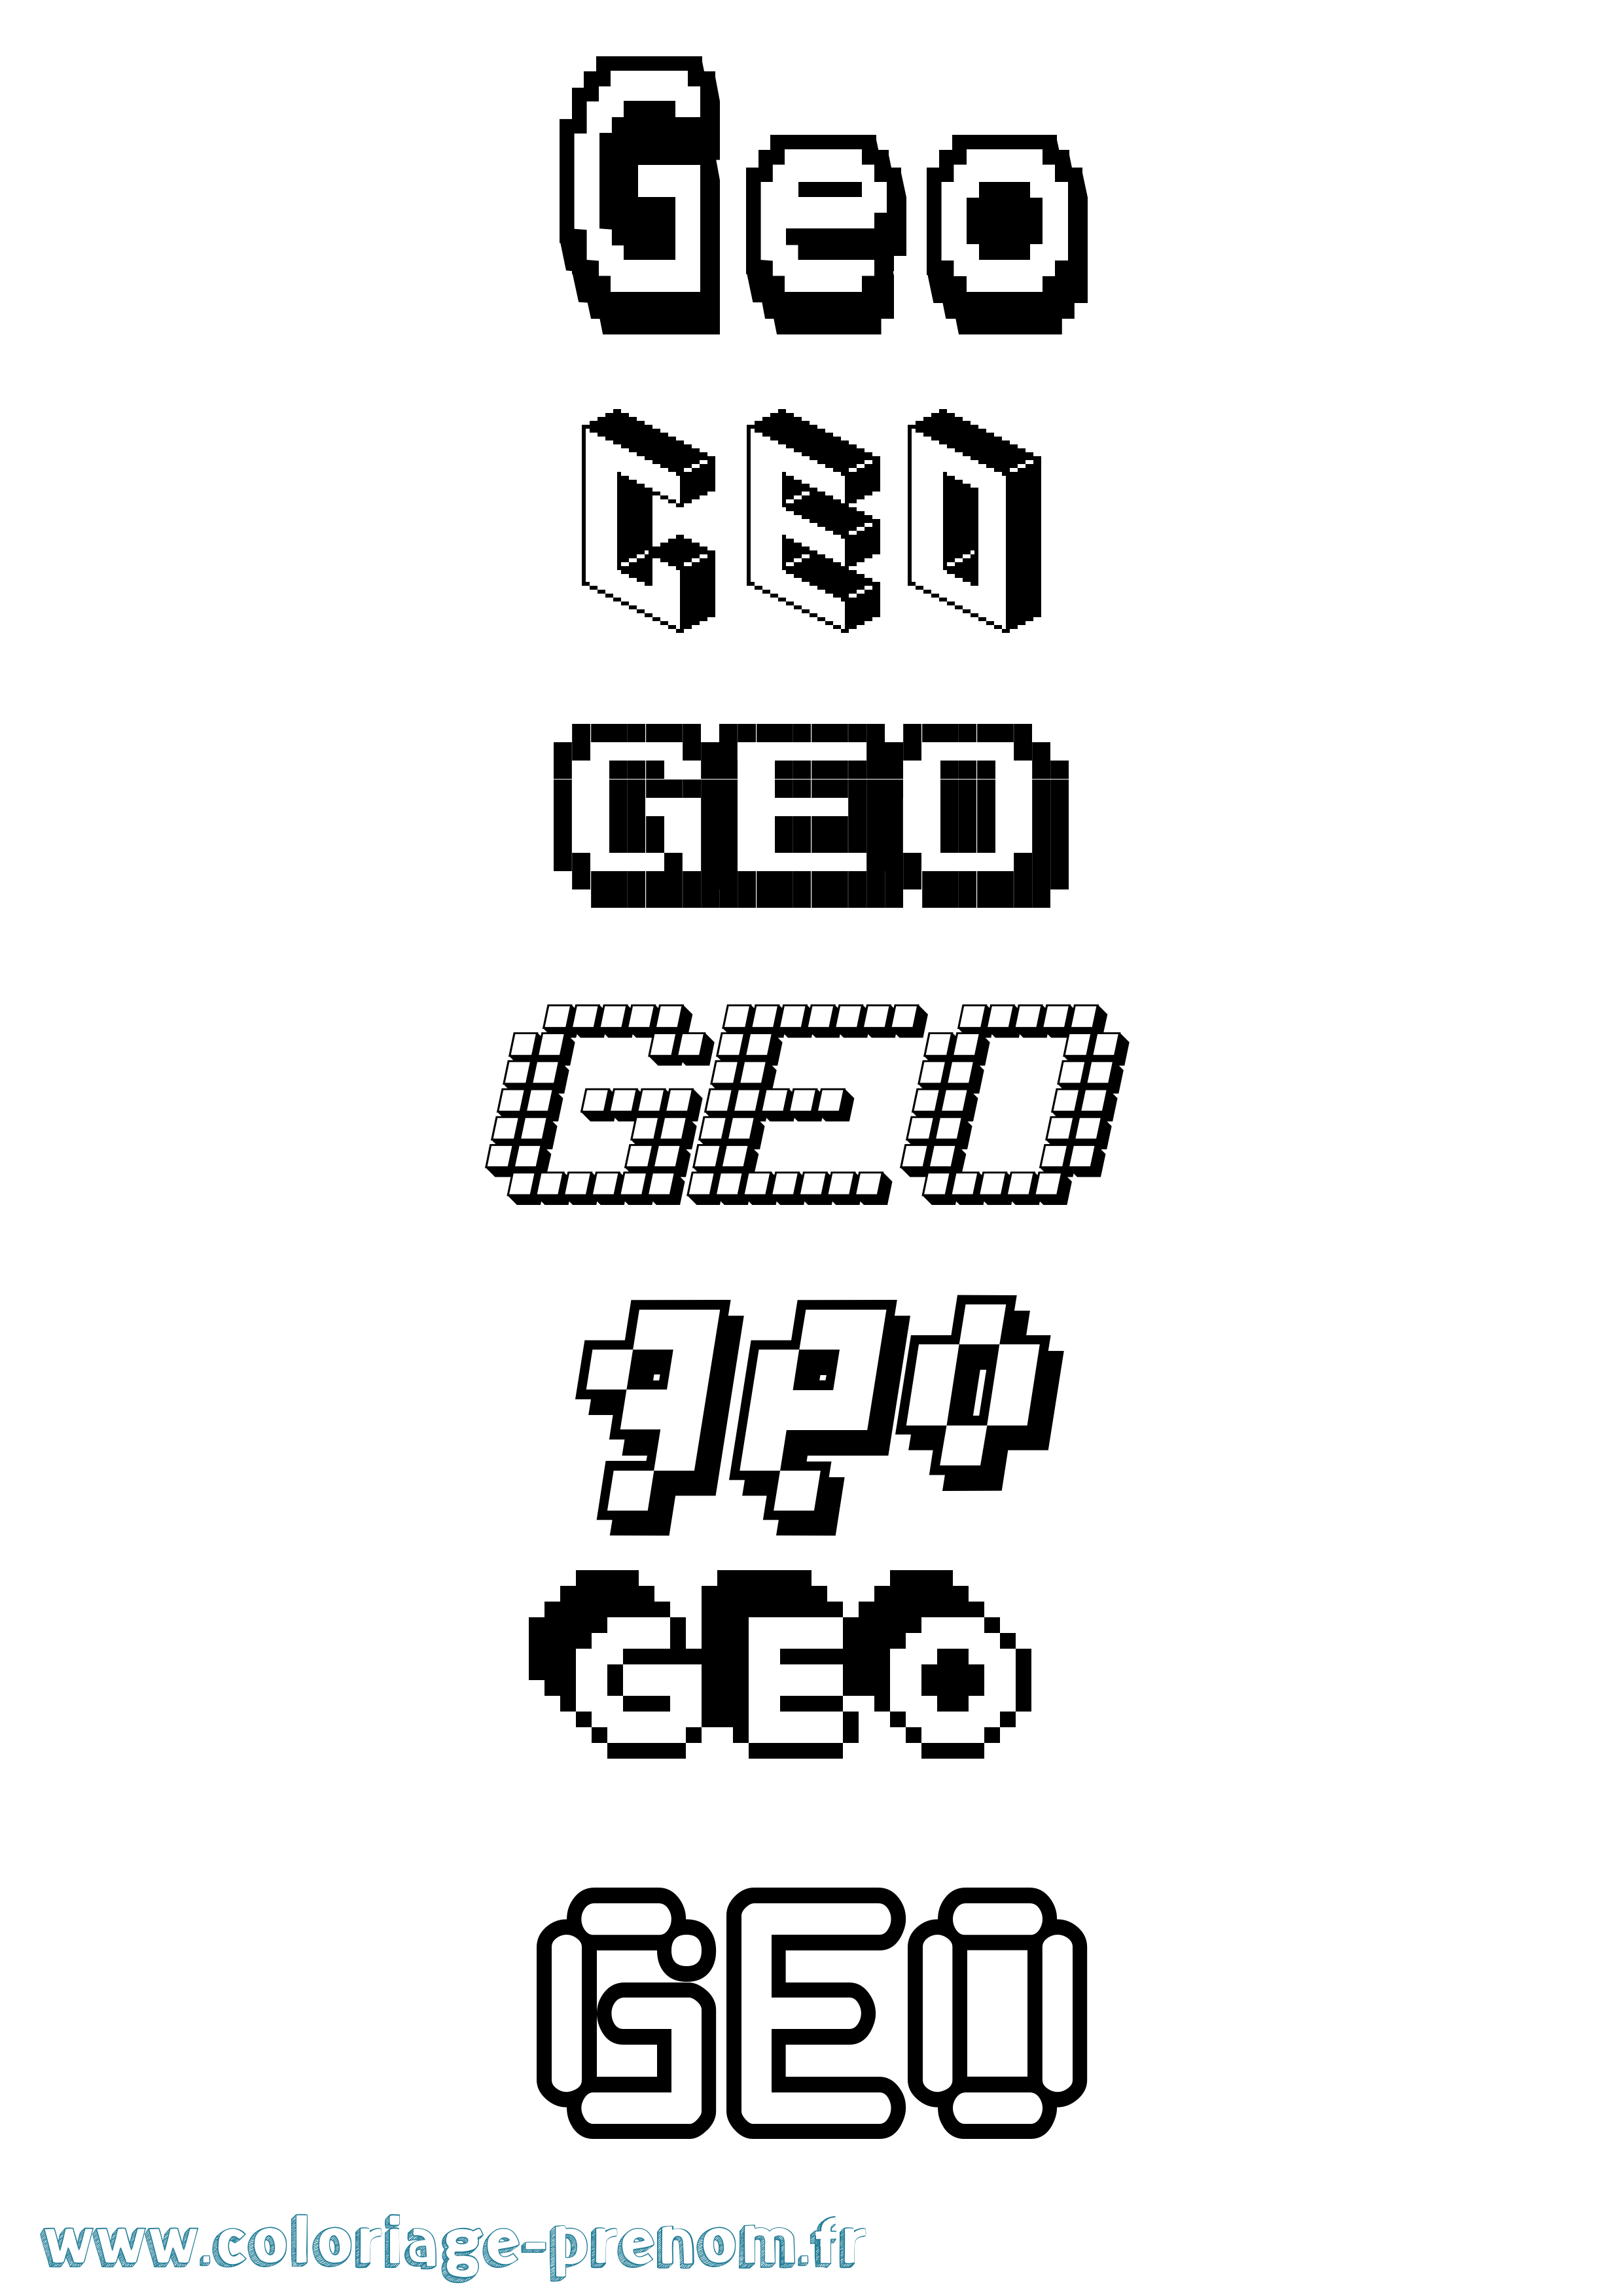 Coloriage prénom Geo Pixel